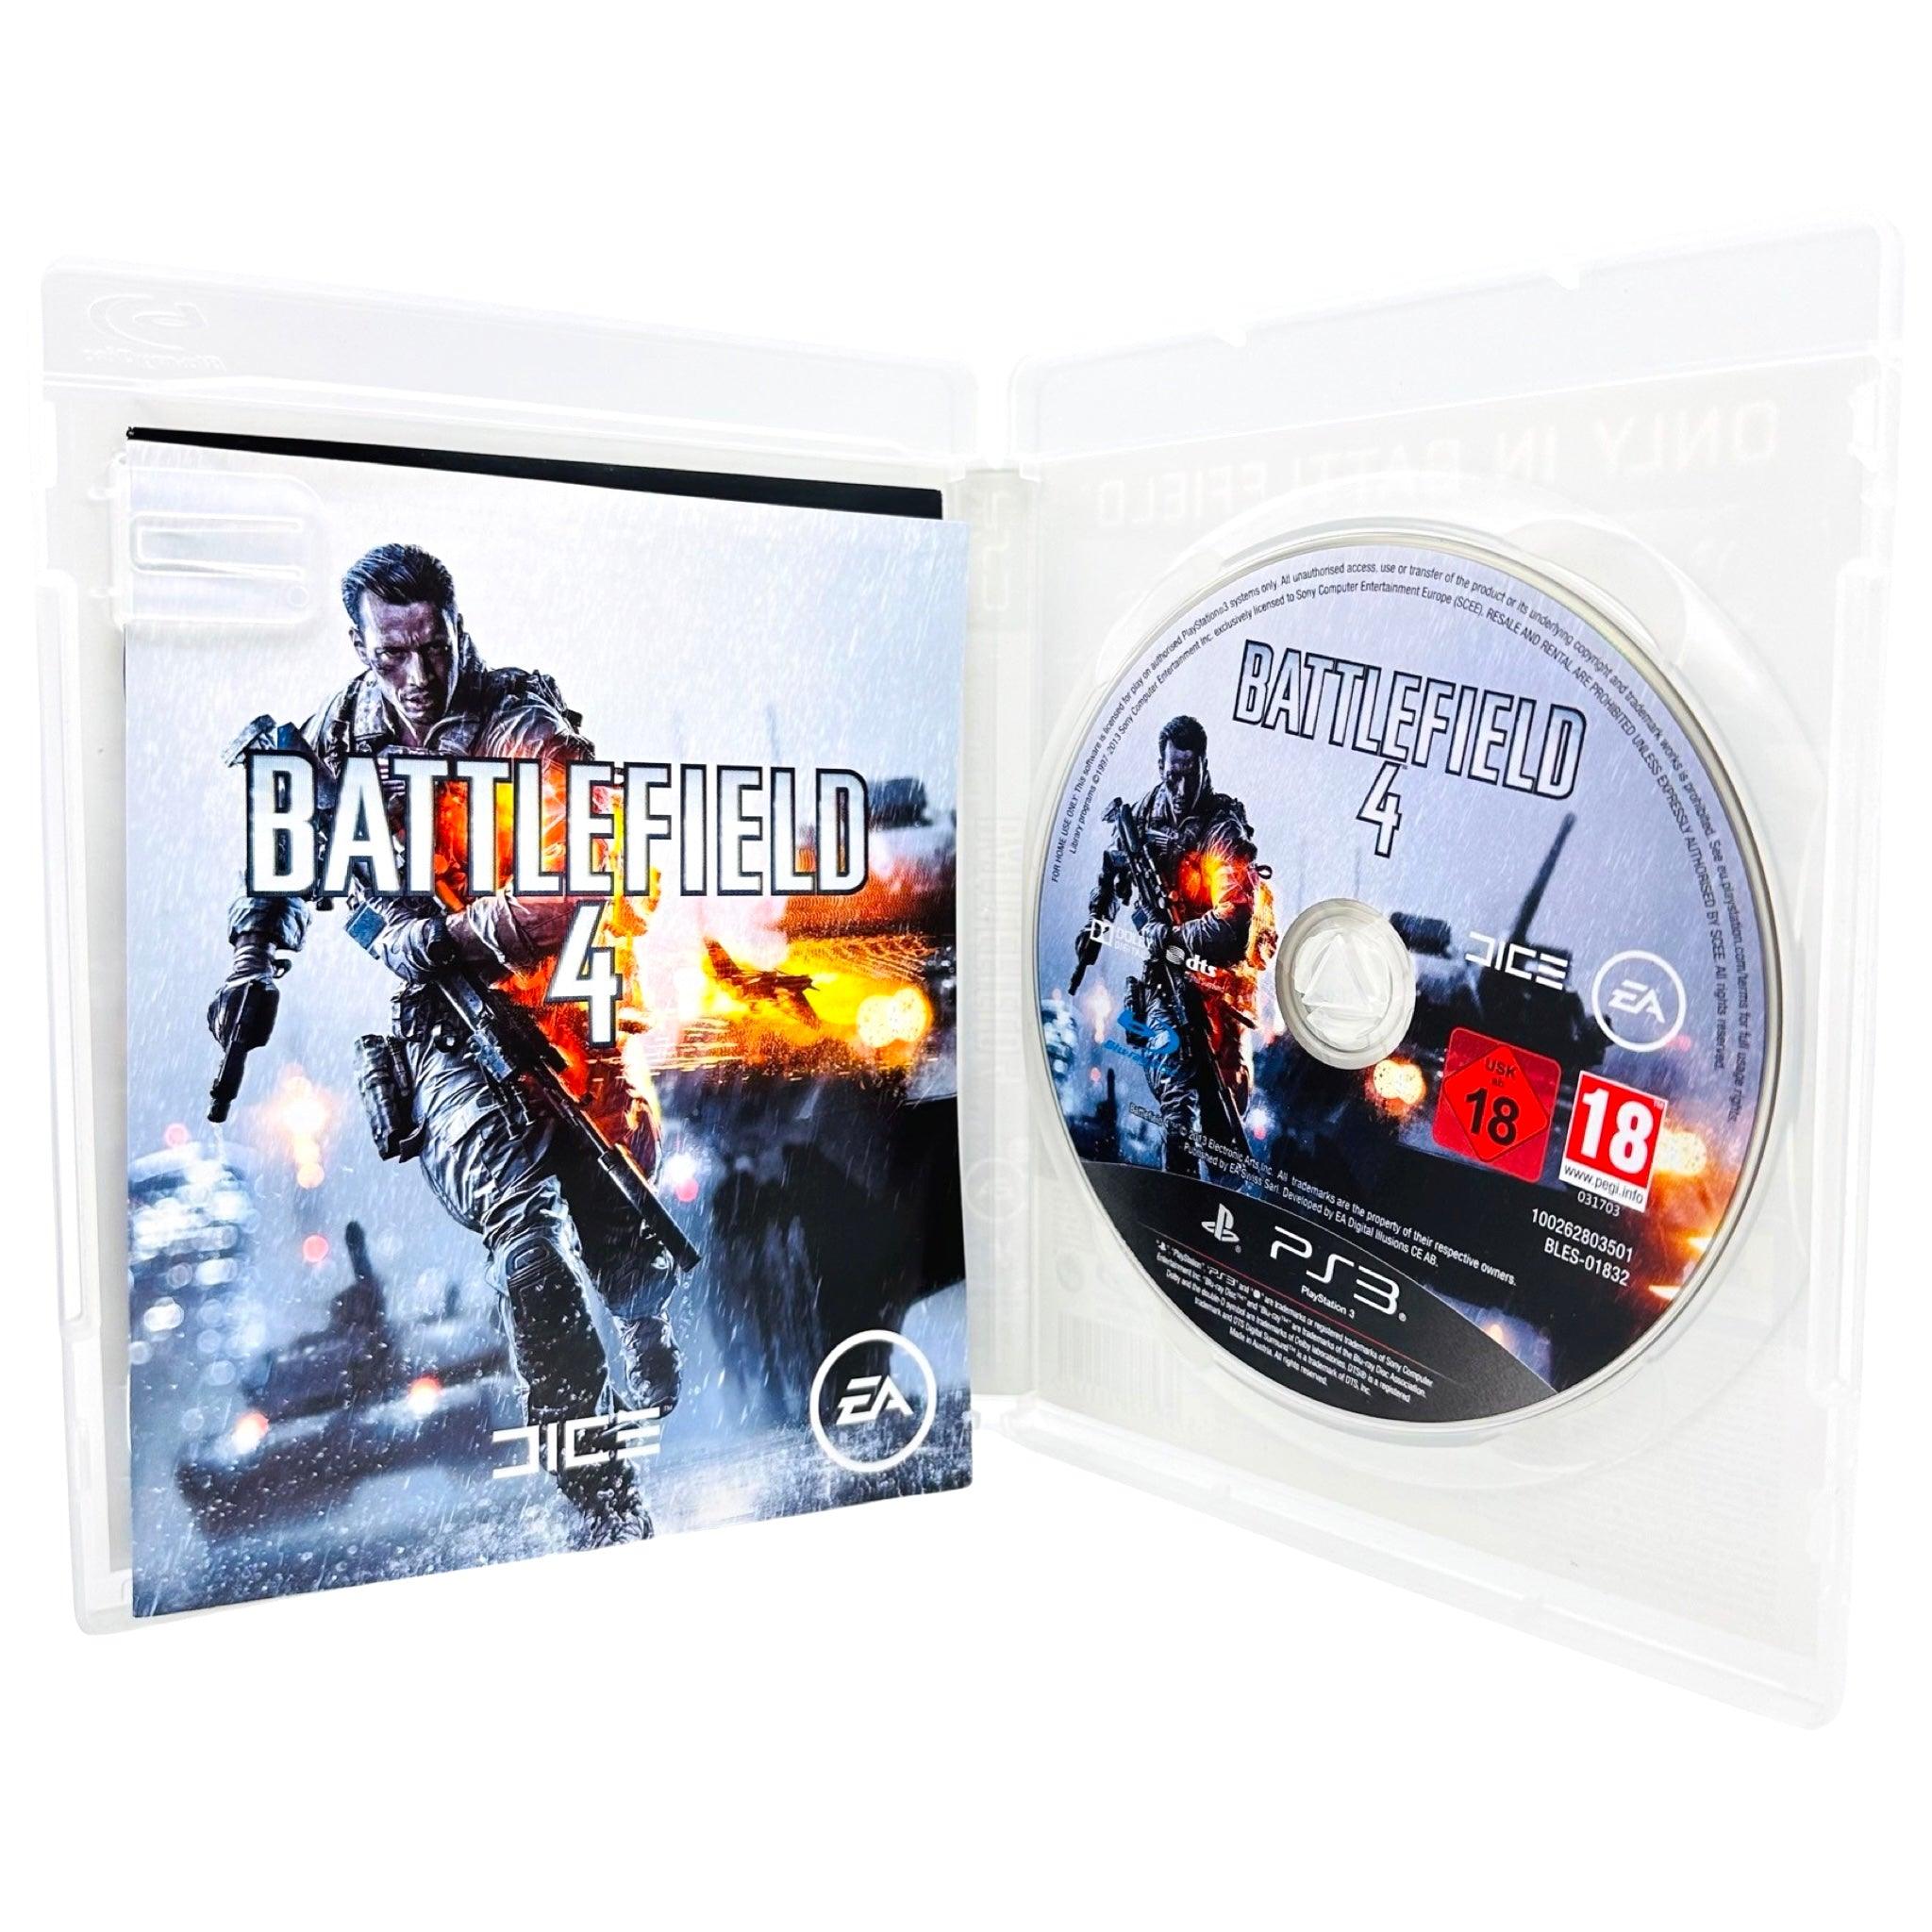 PS3: Battlefield 4 - RetroGaming.no